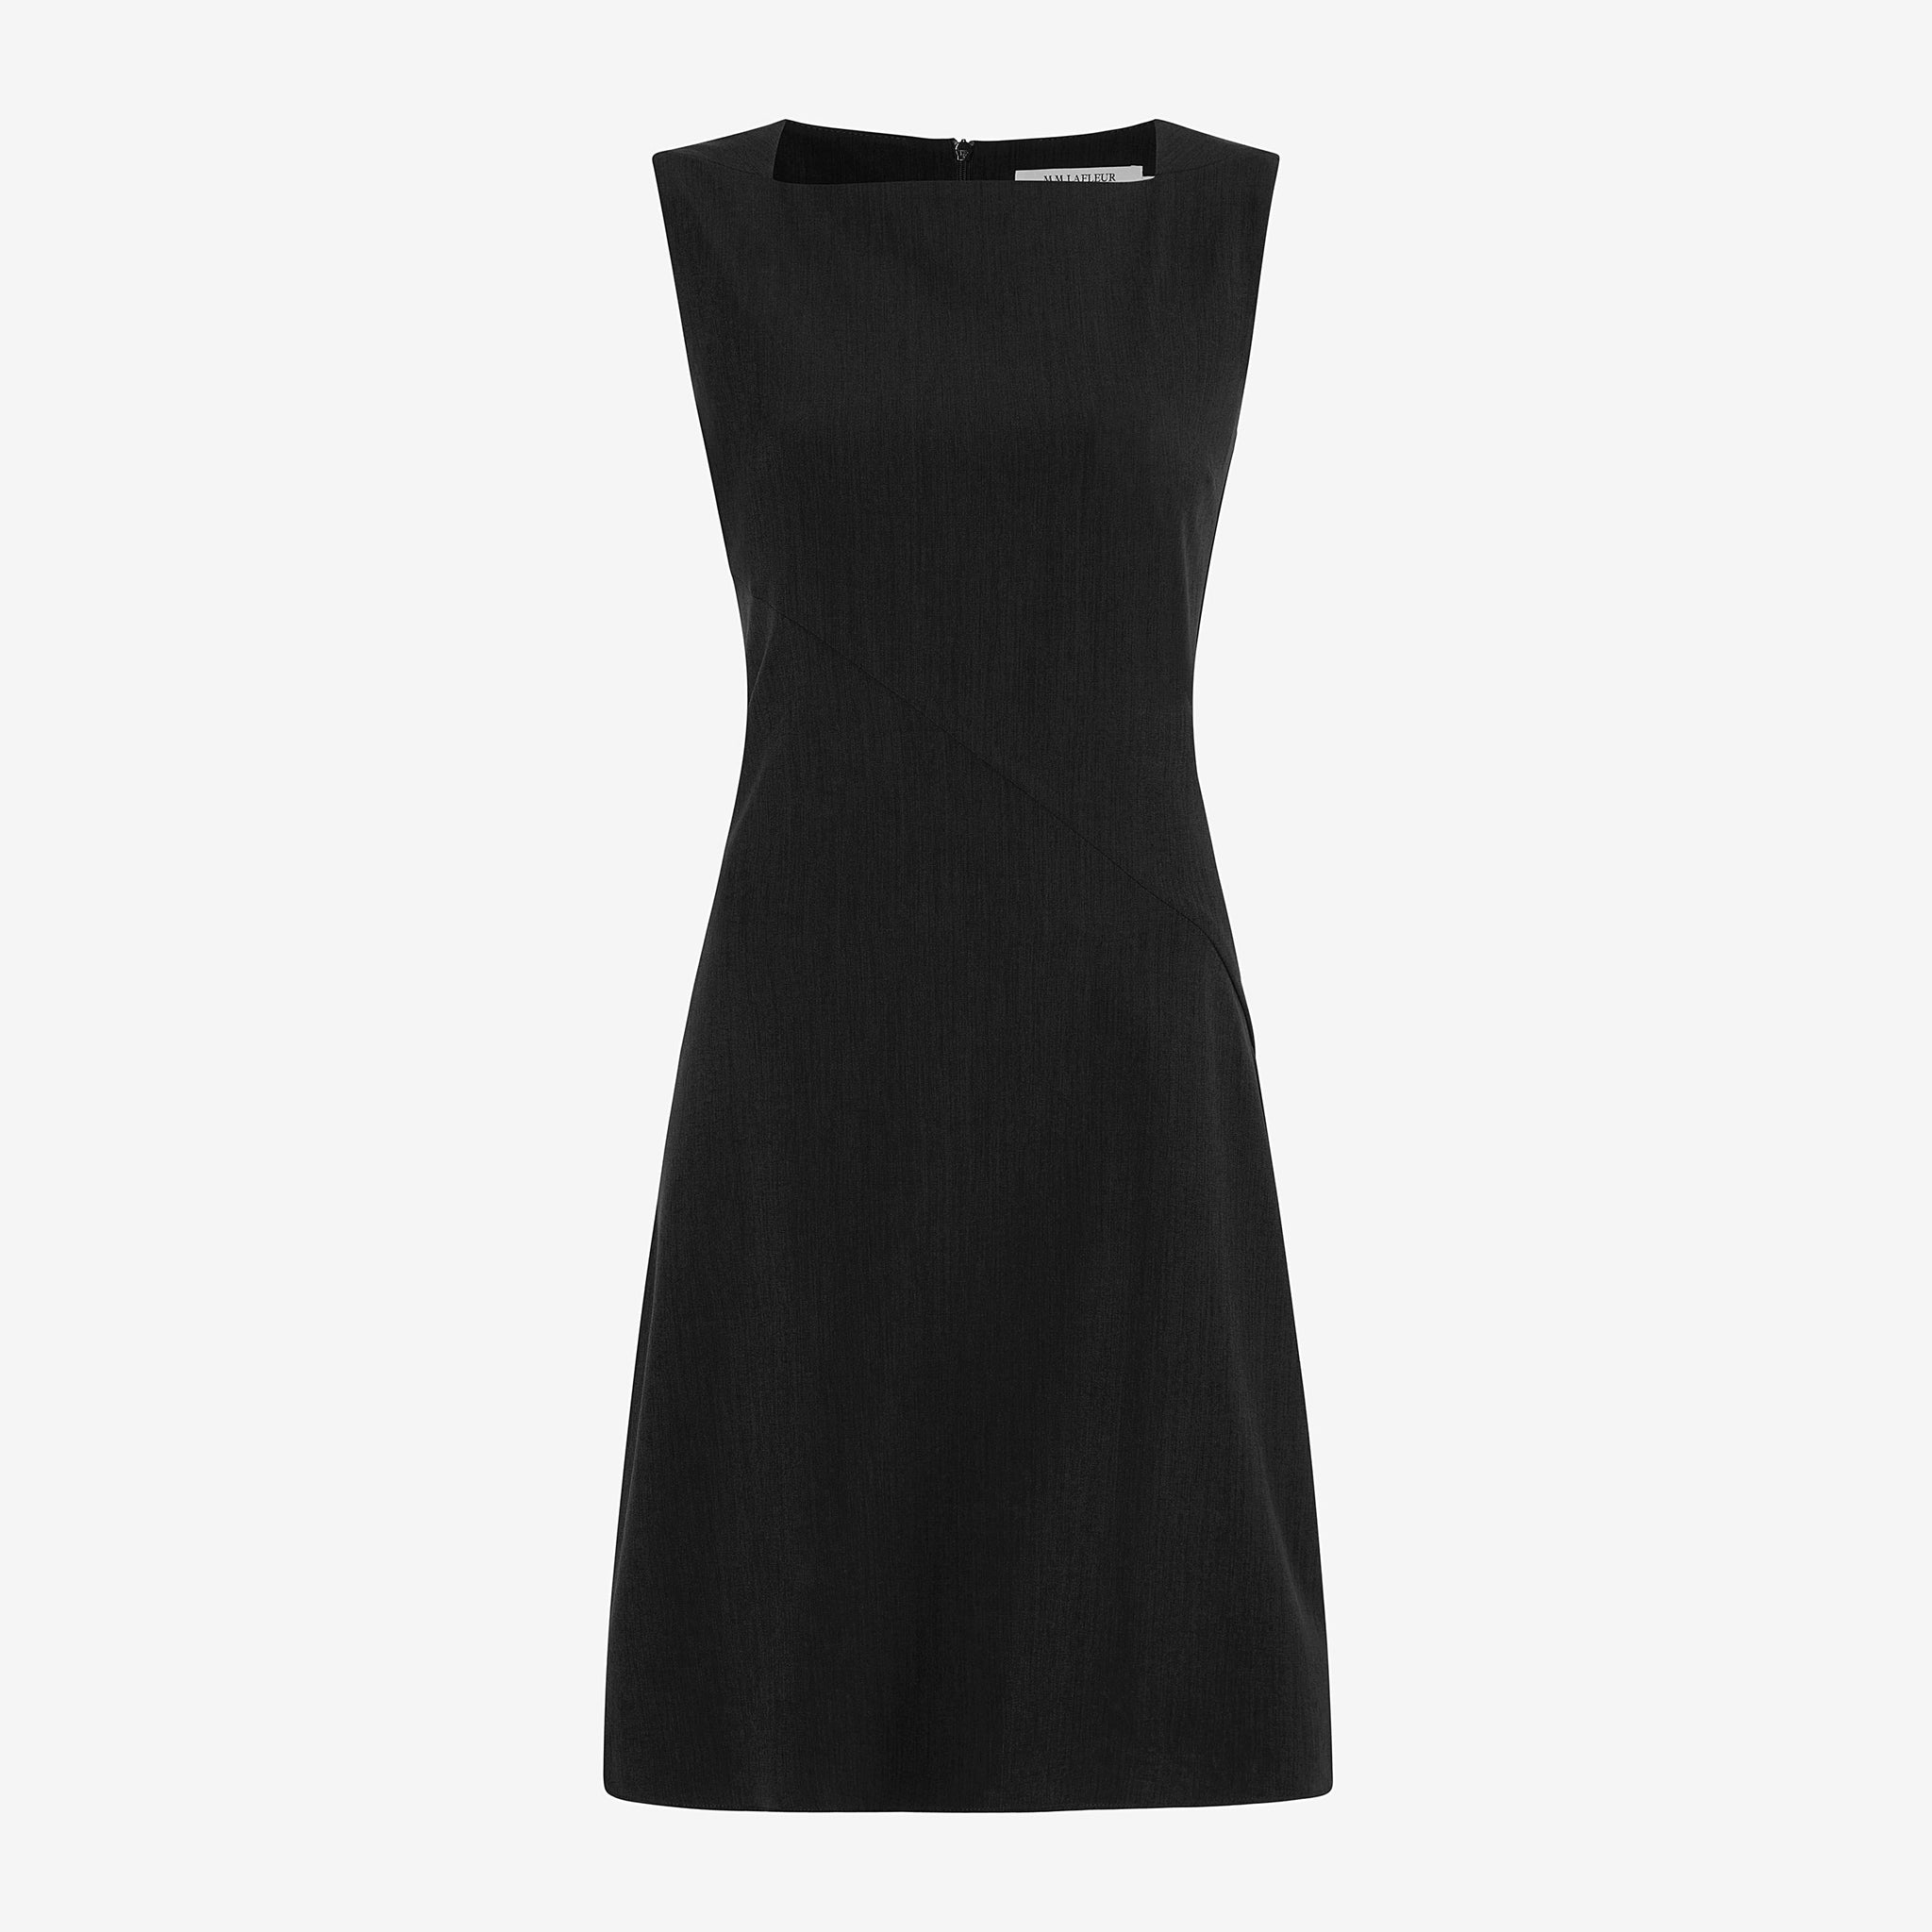 packshot image of the pauline dress in black